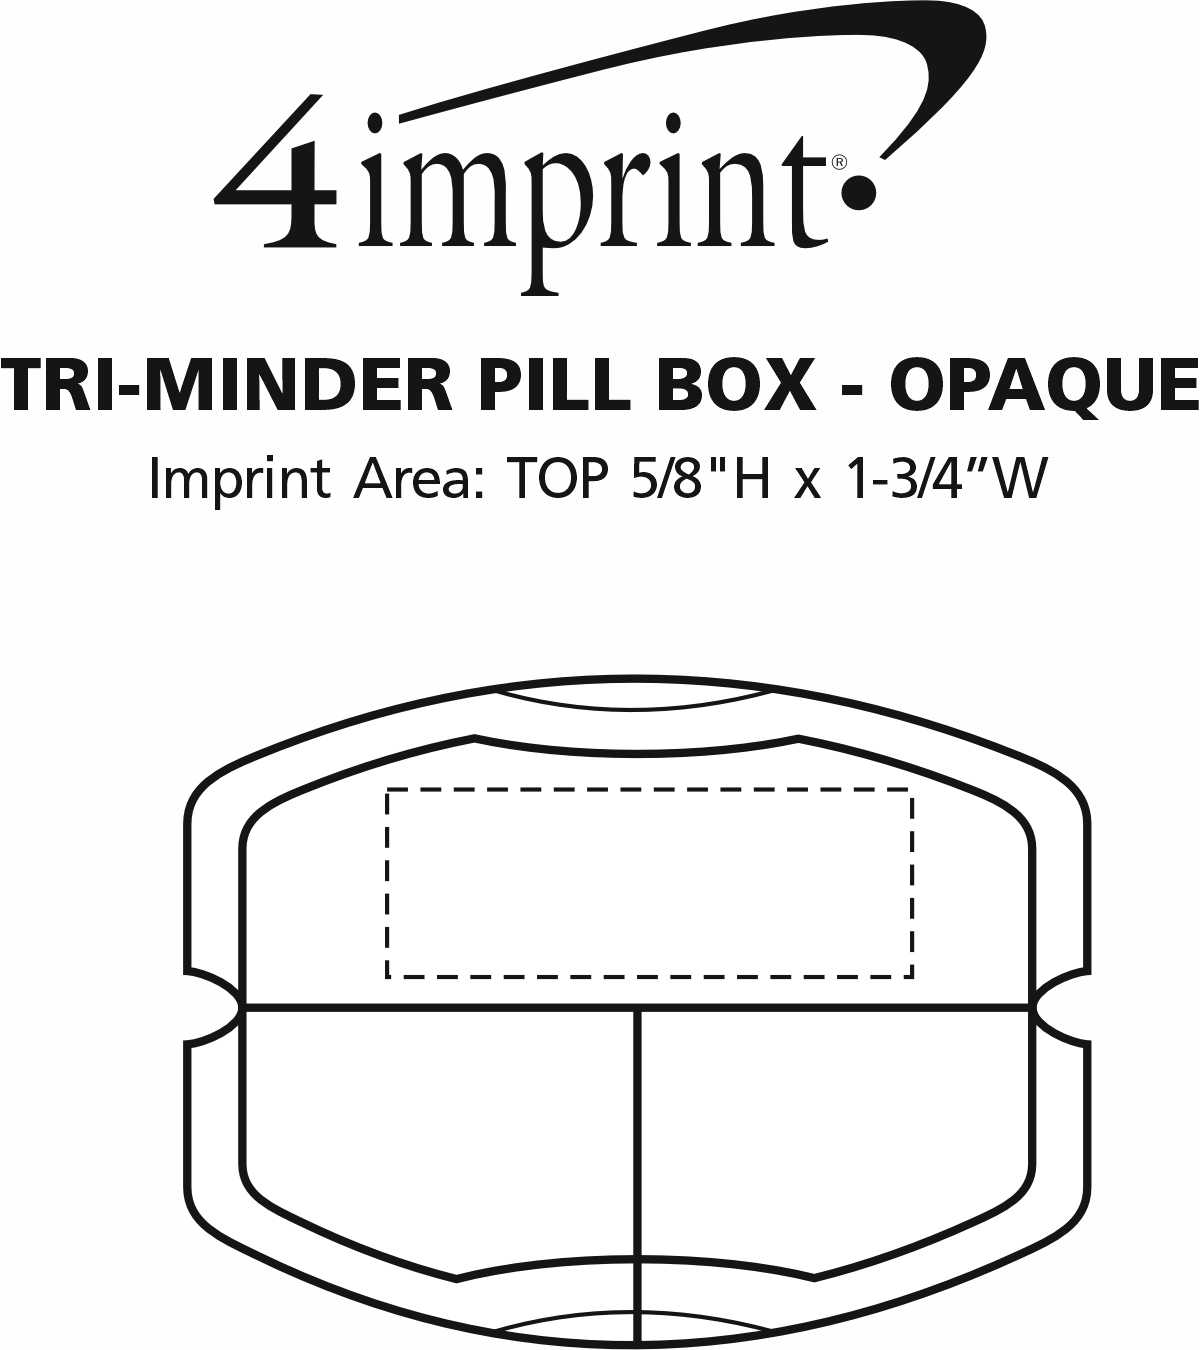 Imprint Area of Tri-Minder Pill Box - Opaque